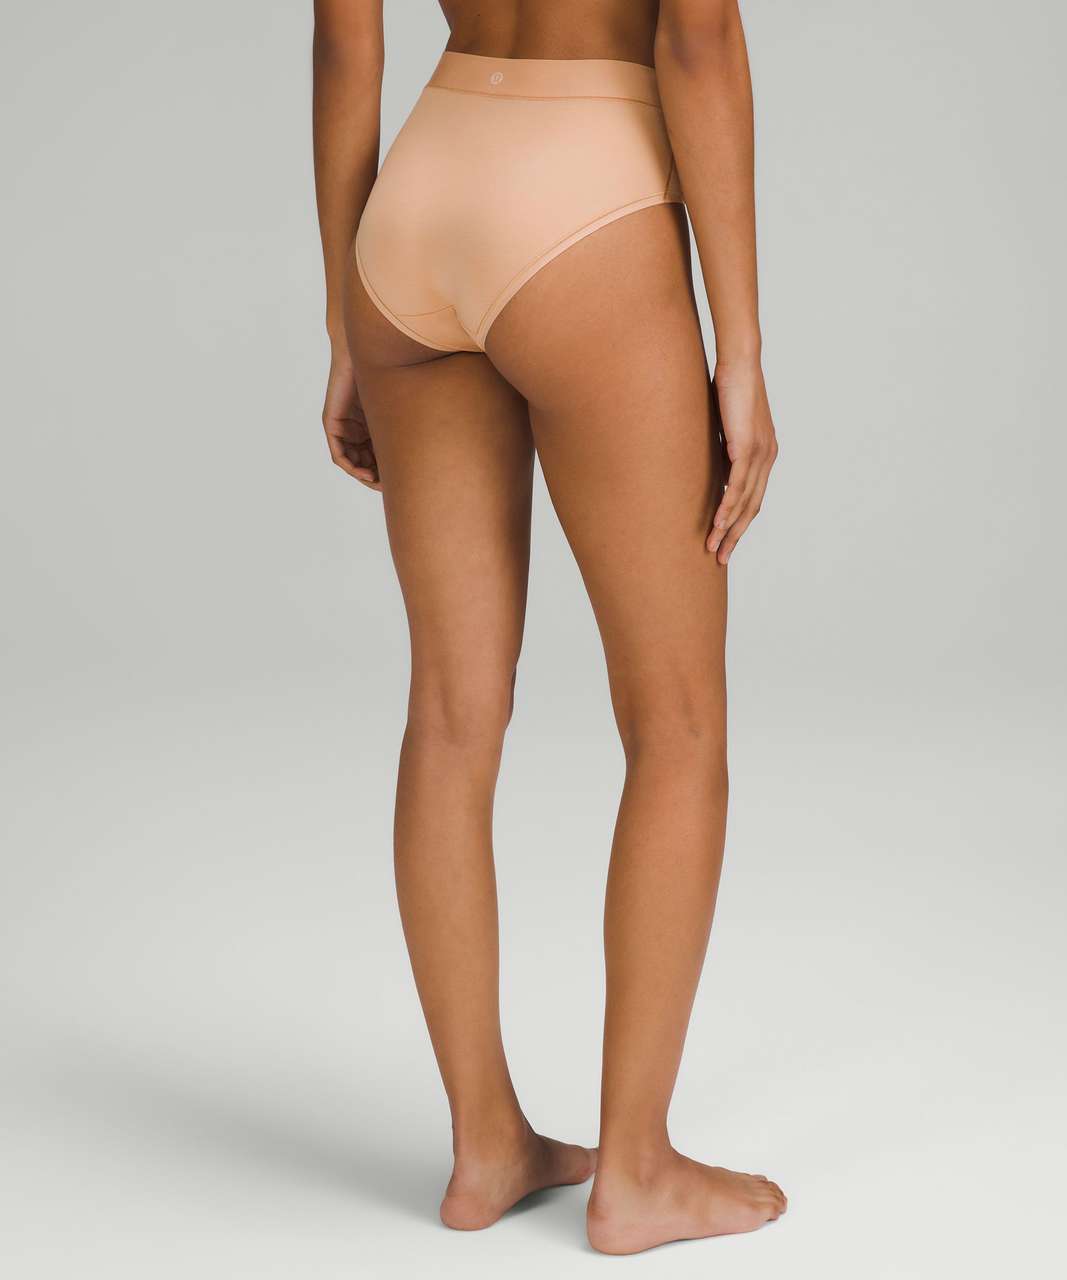 https://storage.googleapis.com/lulu-fanatics/product/82814/1280/lululemon-underease-high-rise-bikini-underwear-contour-040035-439905.jpg